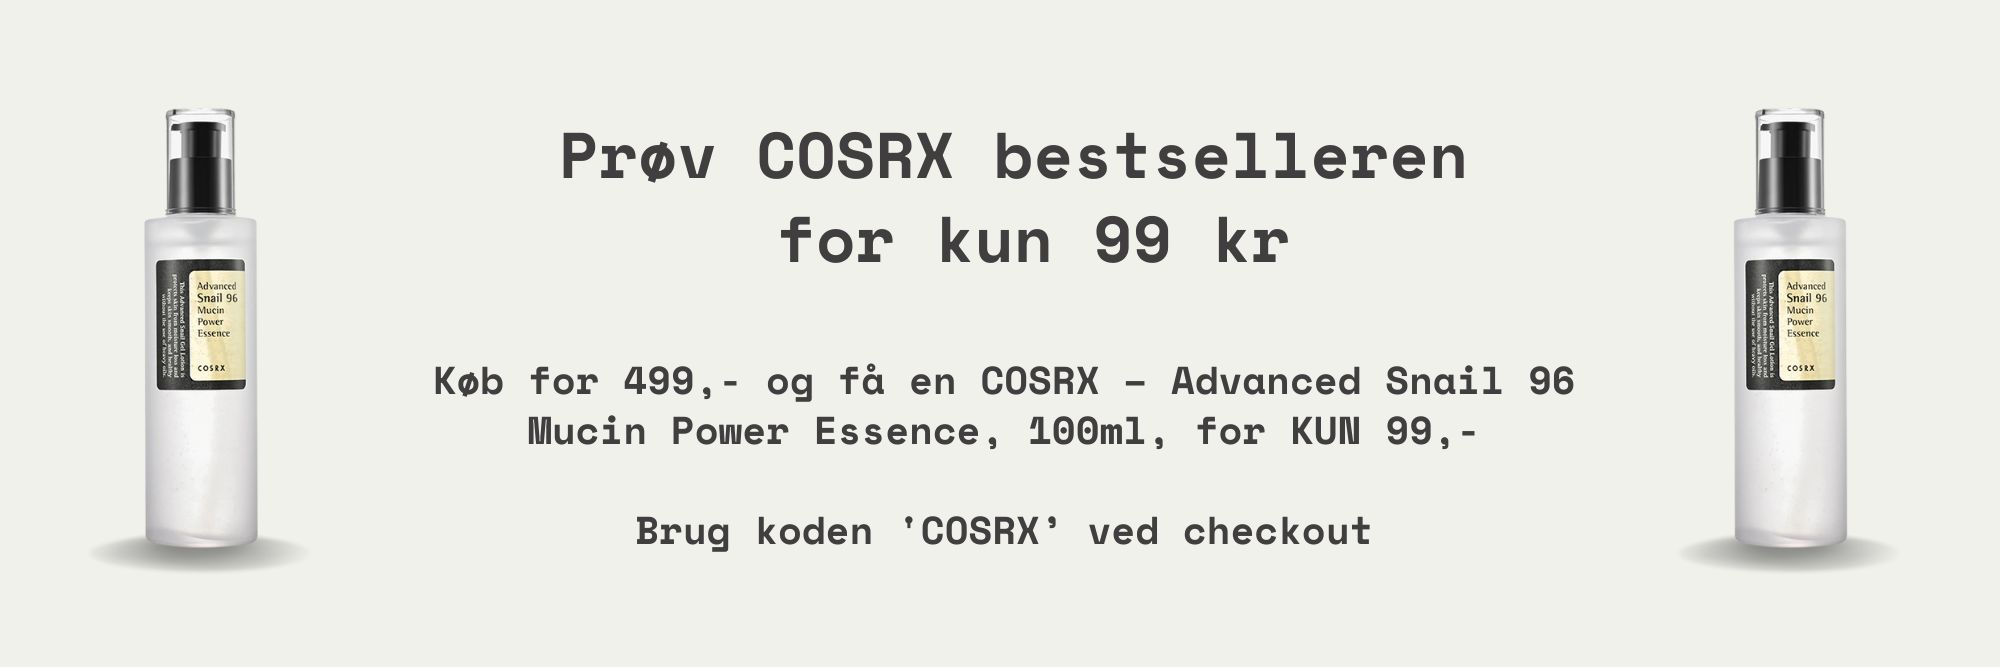 COSRX snail essence tilbud banner web